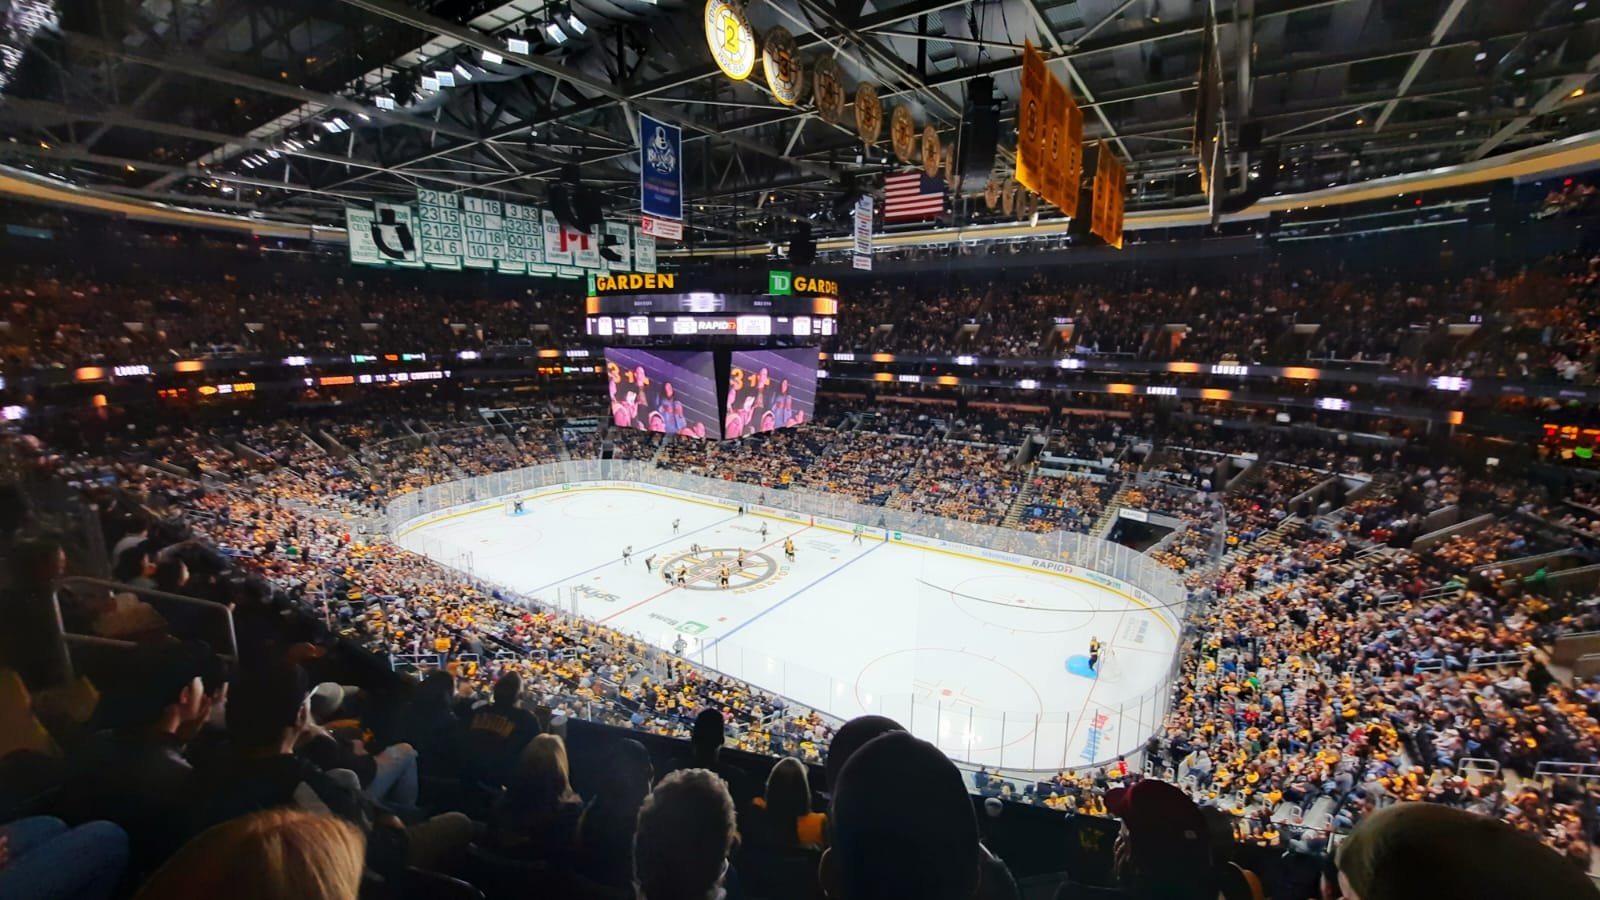 Boston Bruins hockey game